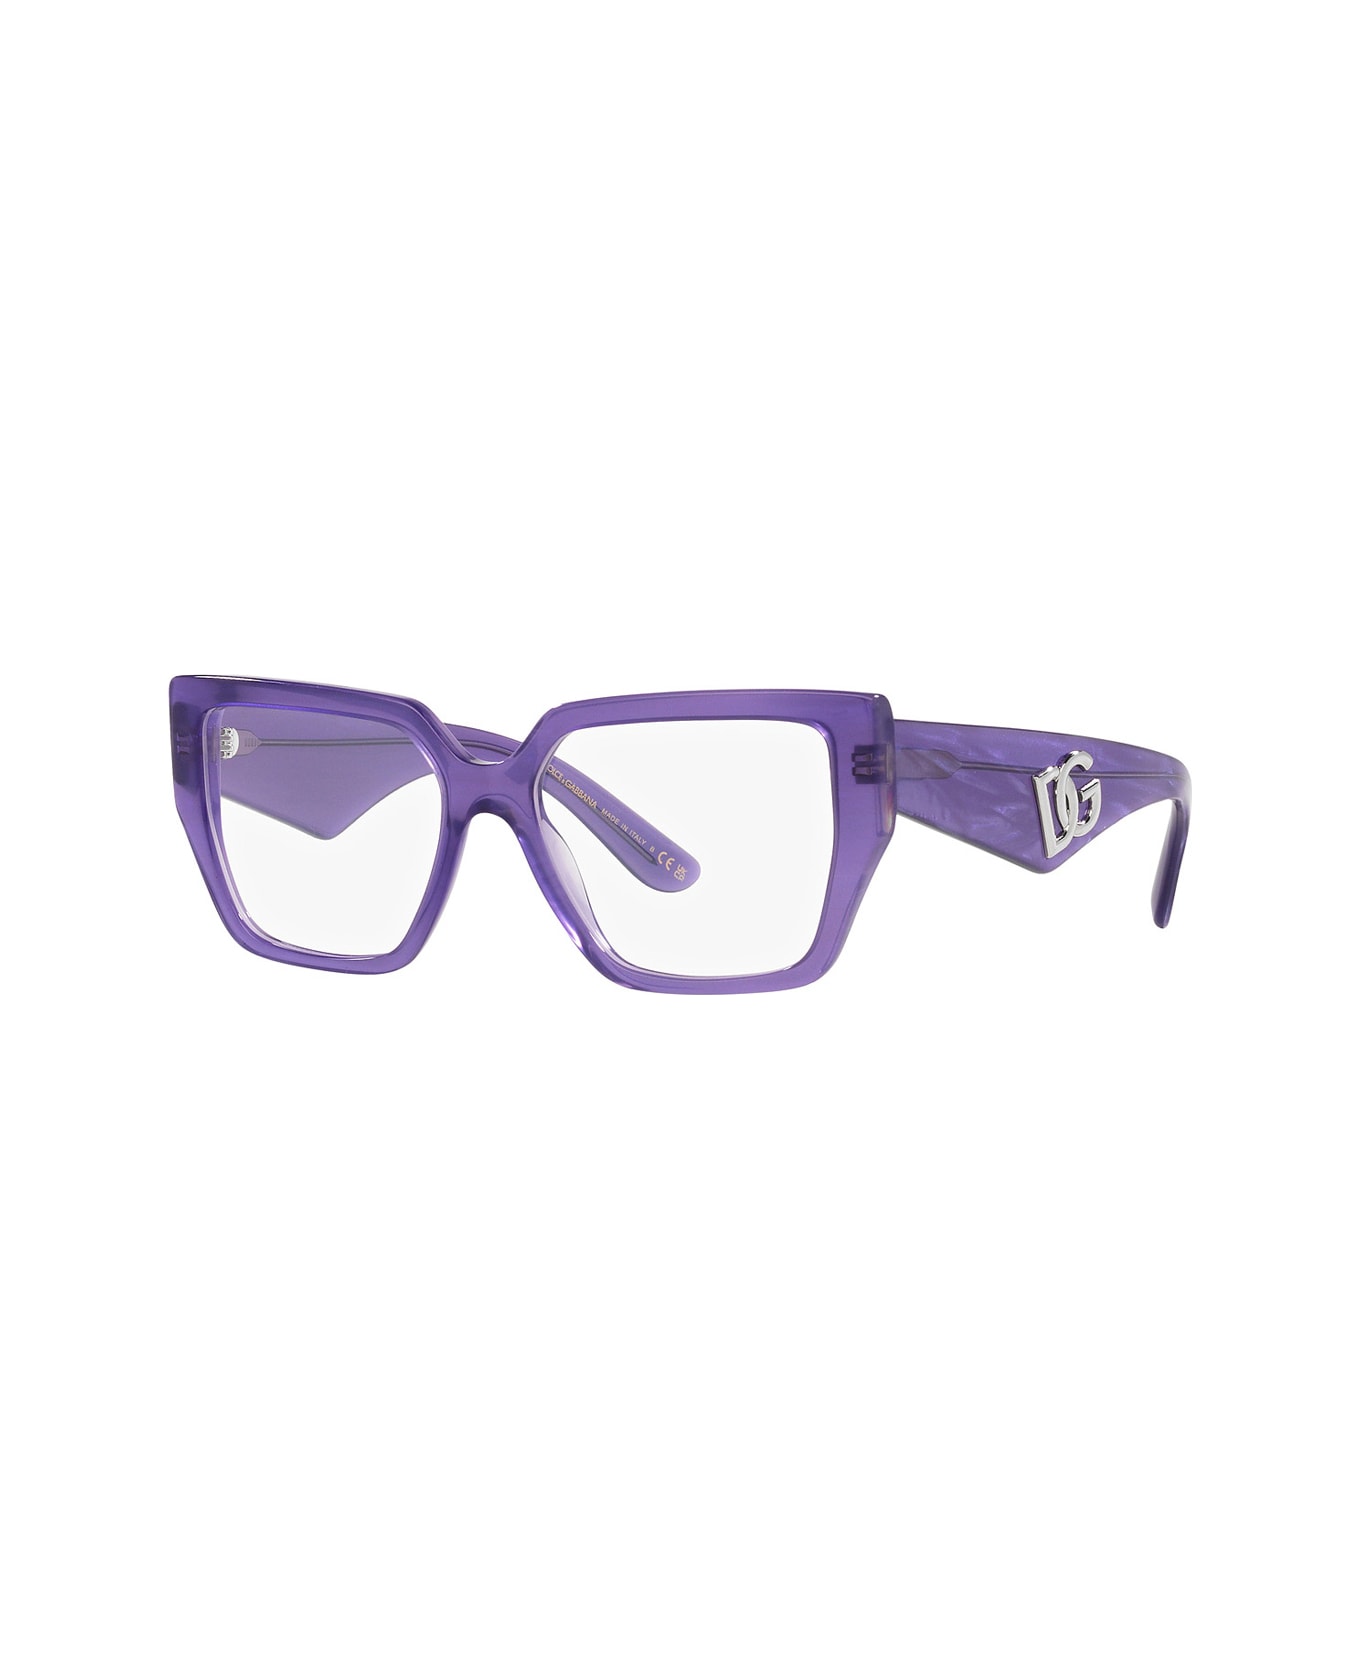 Dolce & Gabbana Eyewear Dg3373 3407 Glasses - Viola アイウェア